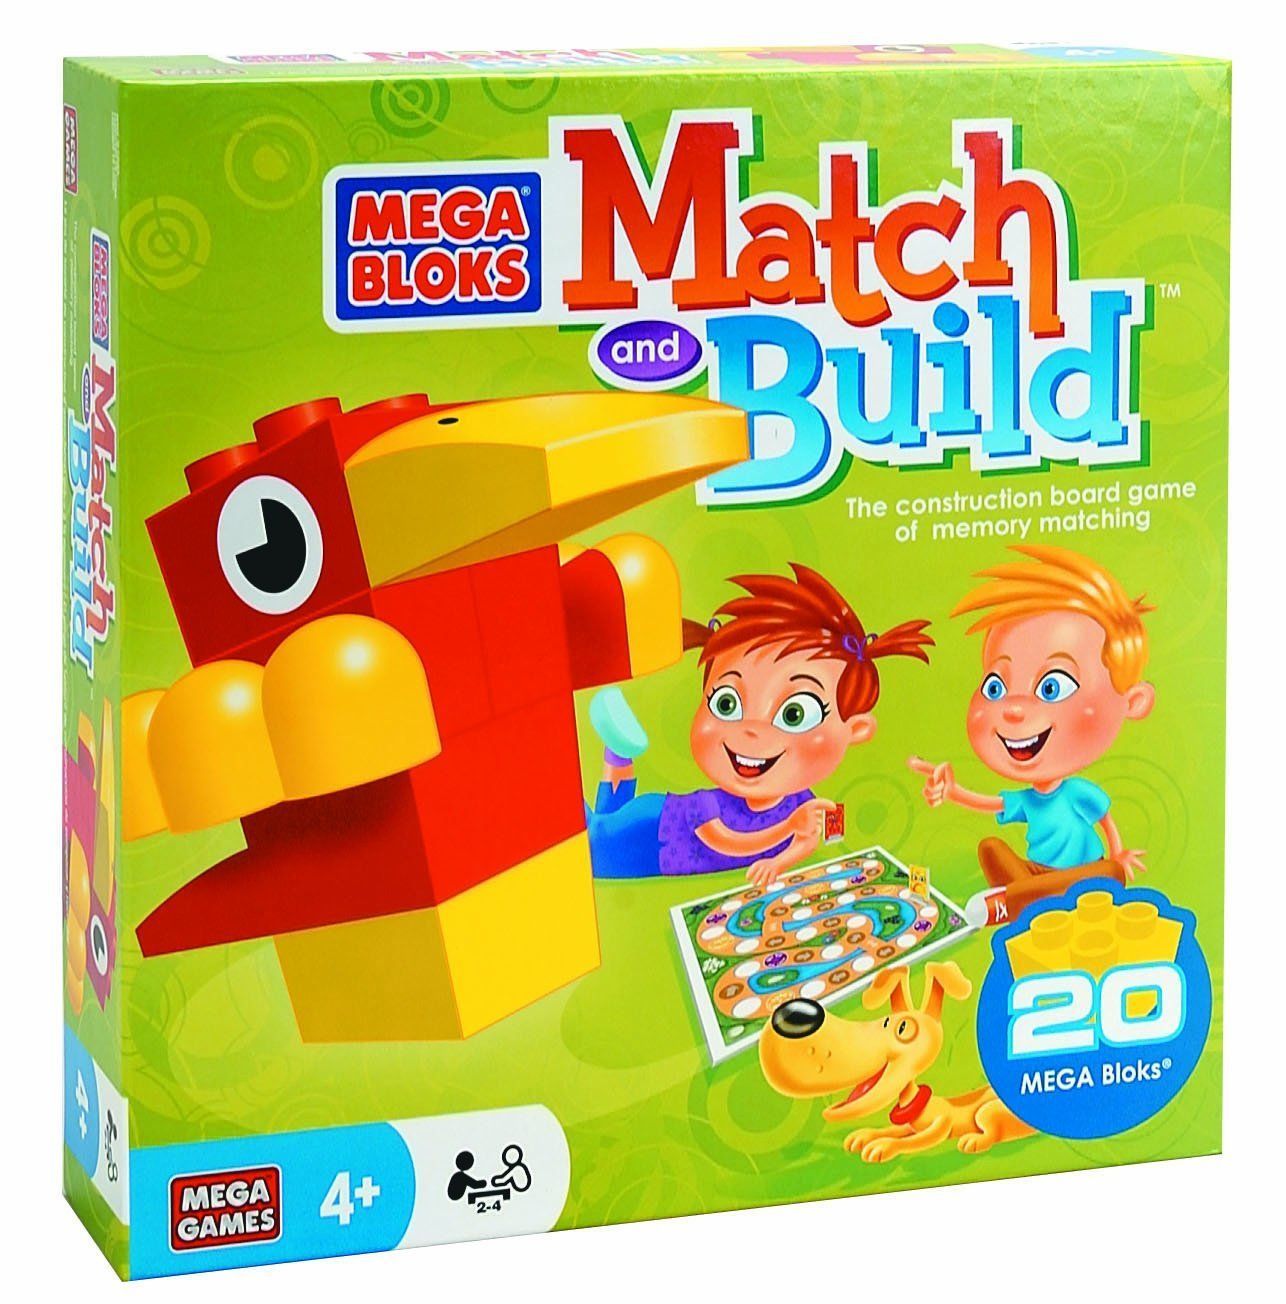 Mega Bloks Match and Build